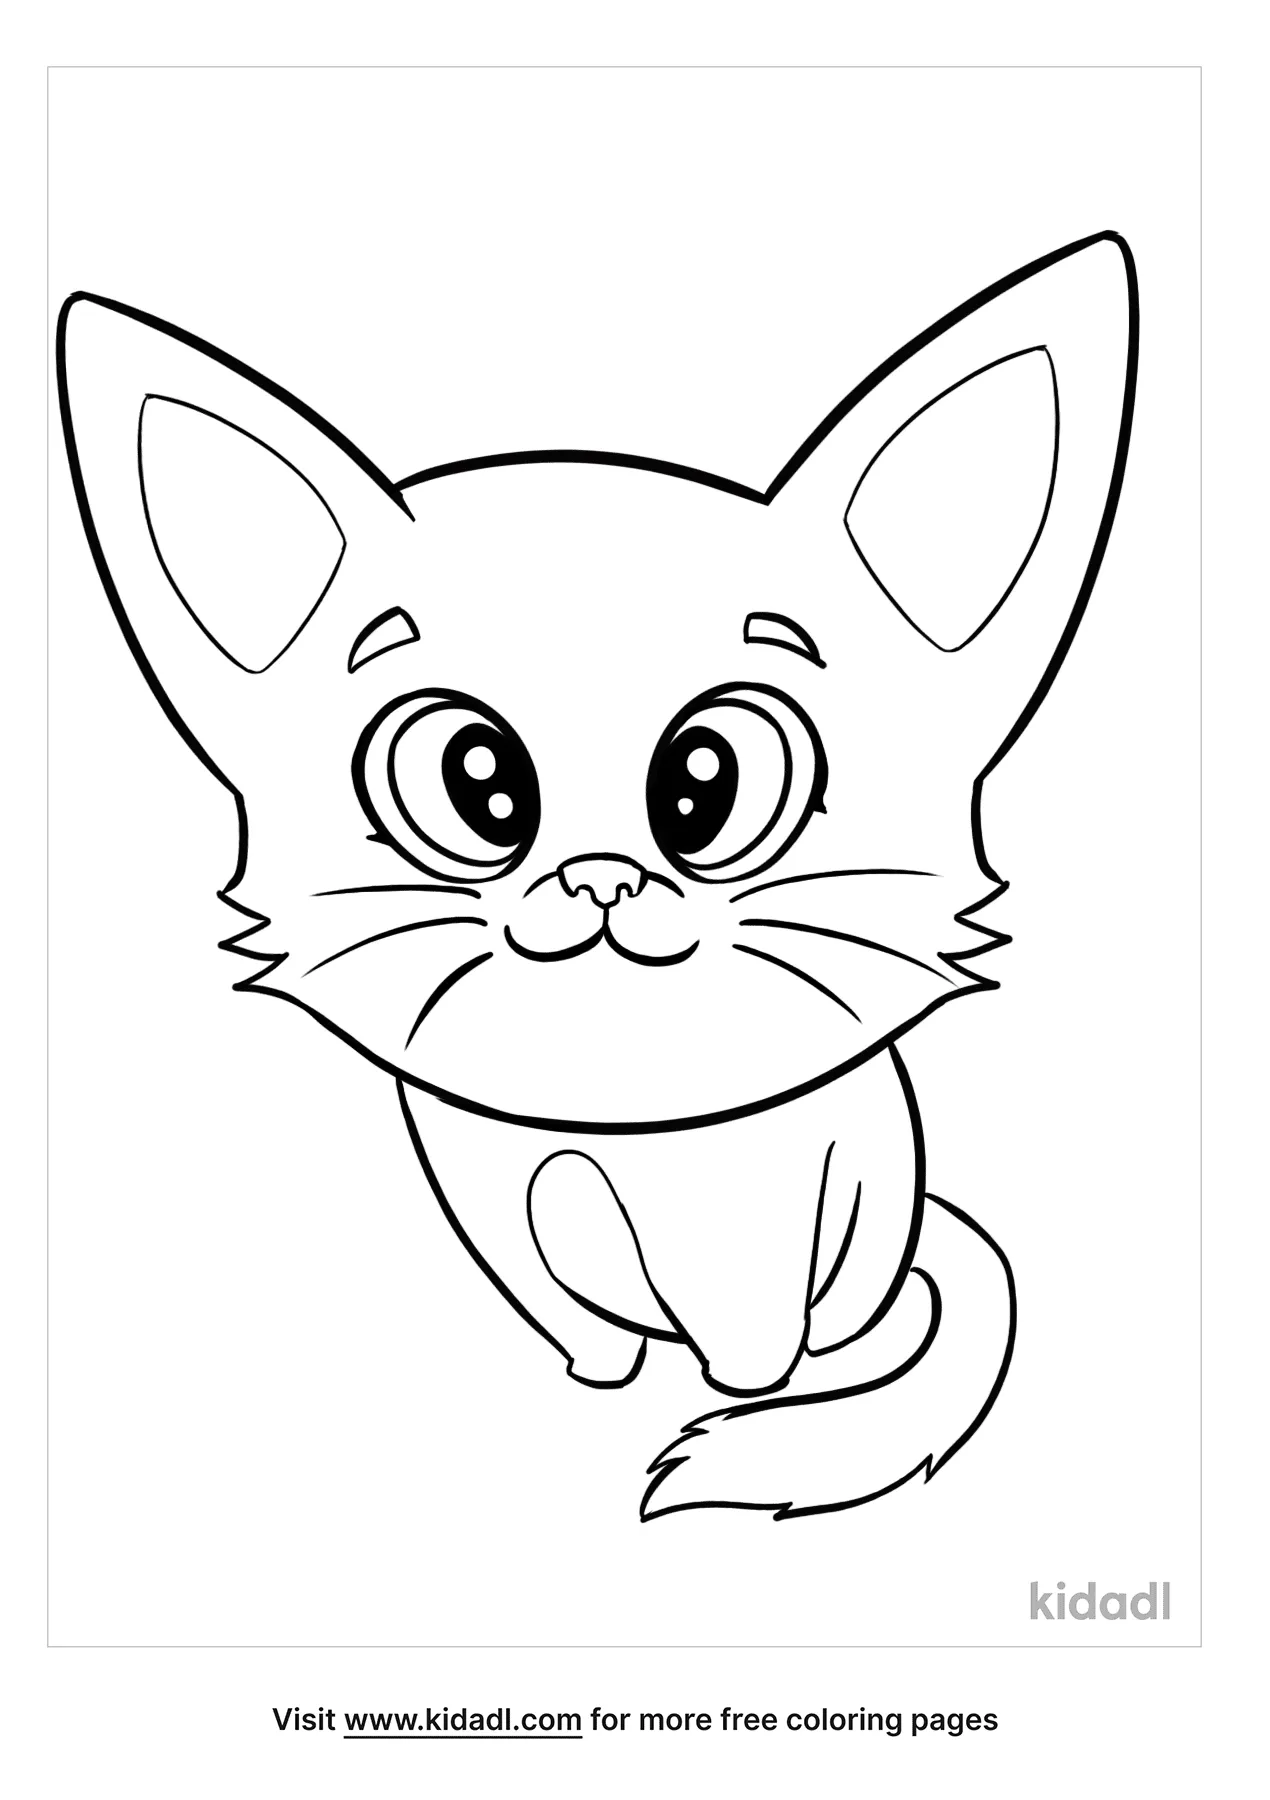 Free Big Eyed Kitten Coloring Page | Coloring Page Printables | Kidadl